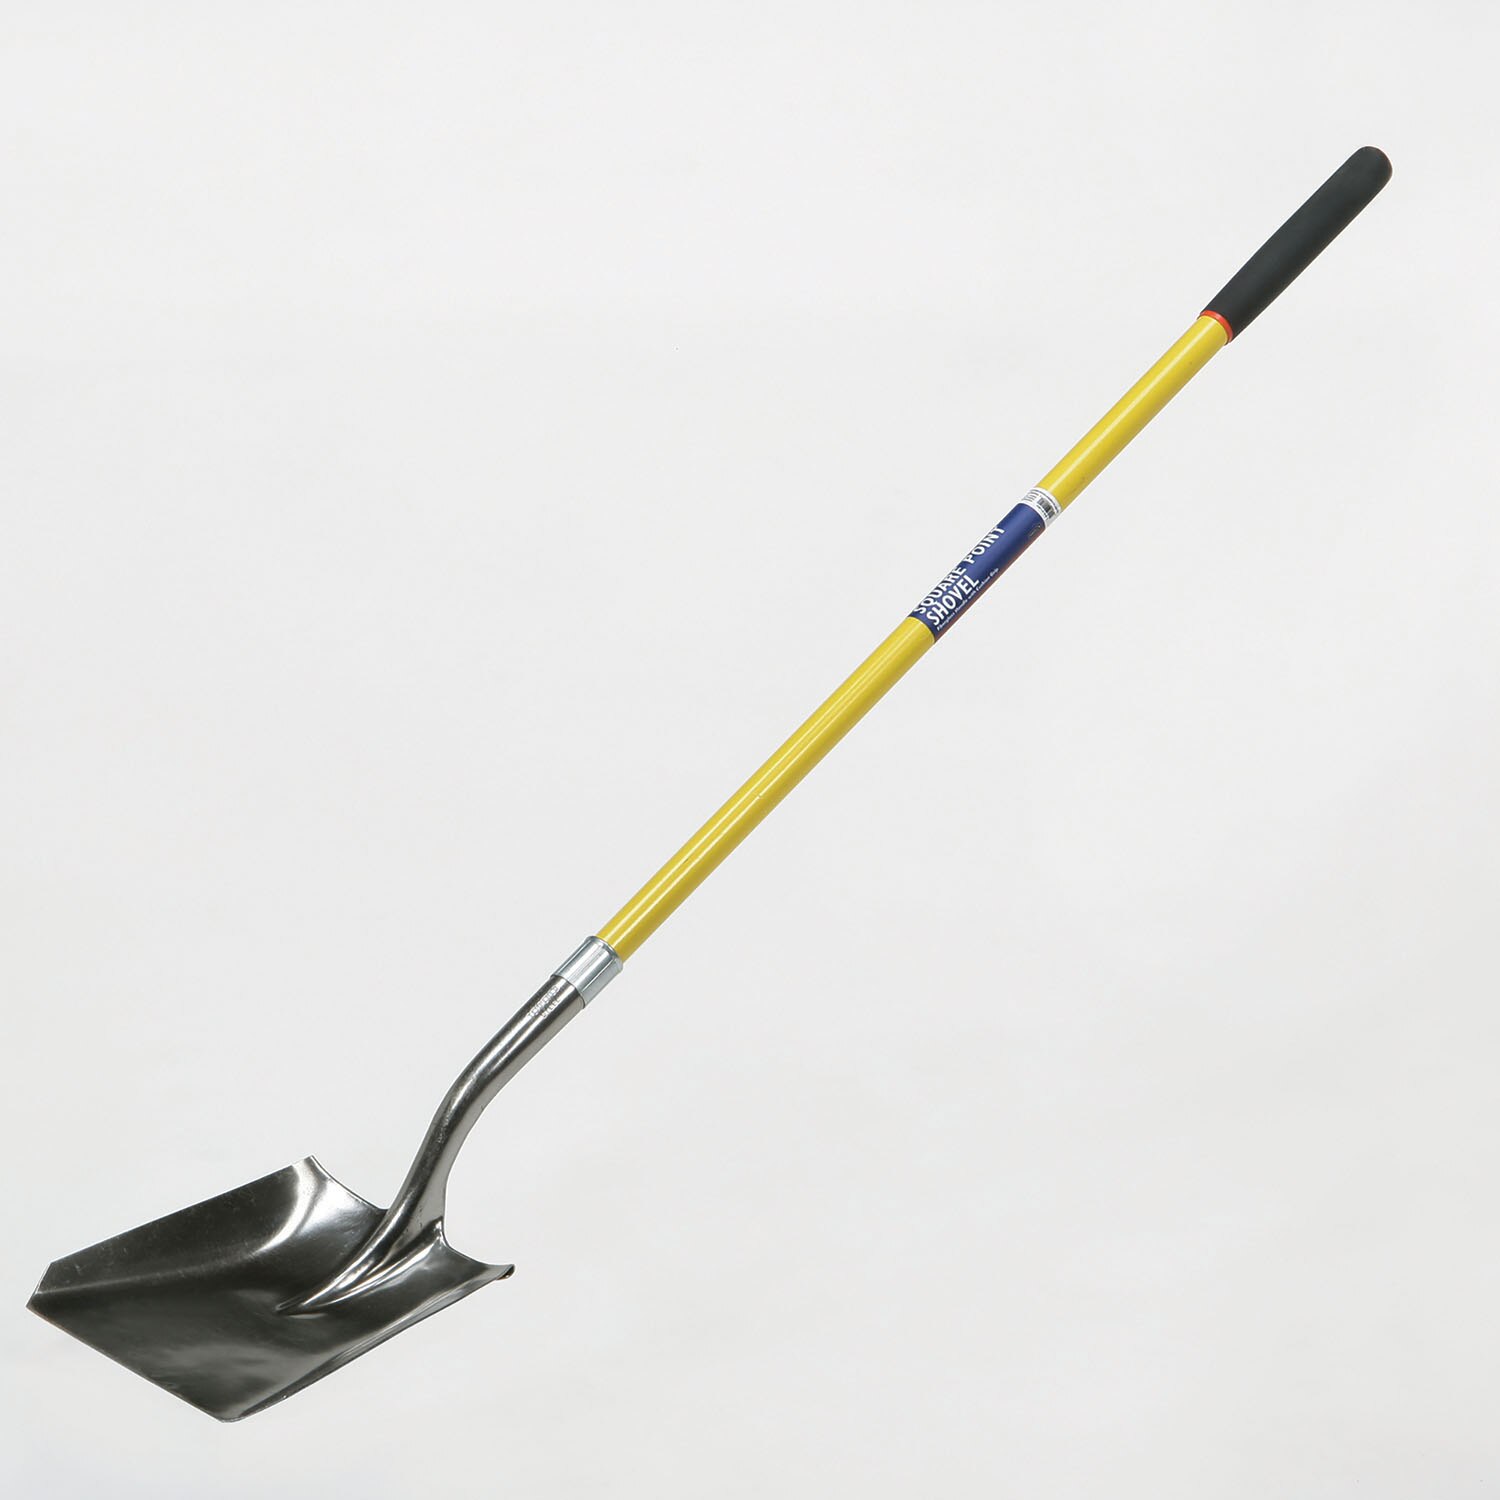 Shovel, Square Point, Open Back, Industrial Grade, 48" Fiberglass Handle, Cushioned Grip